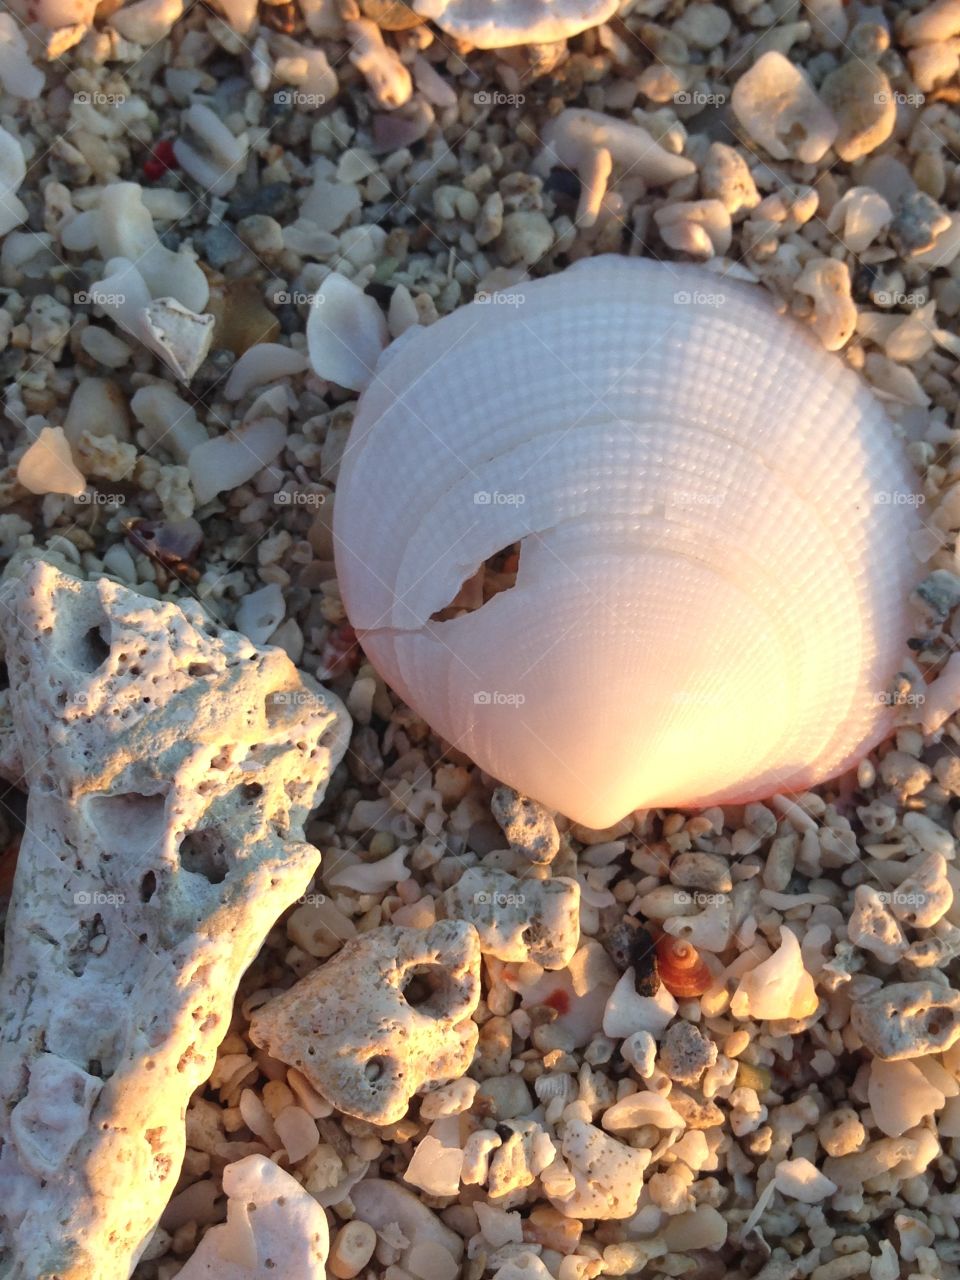 Shells by the seashore